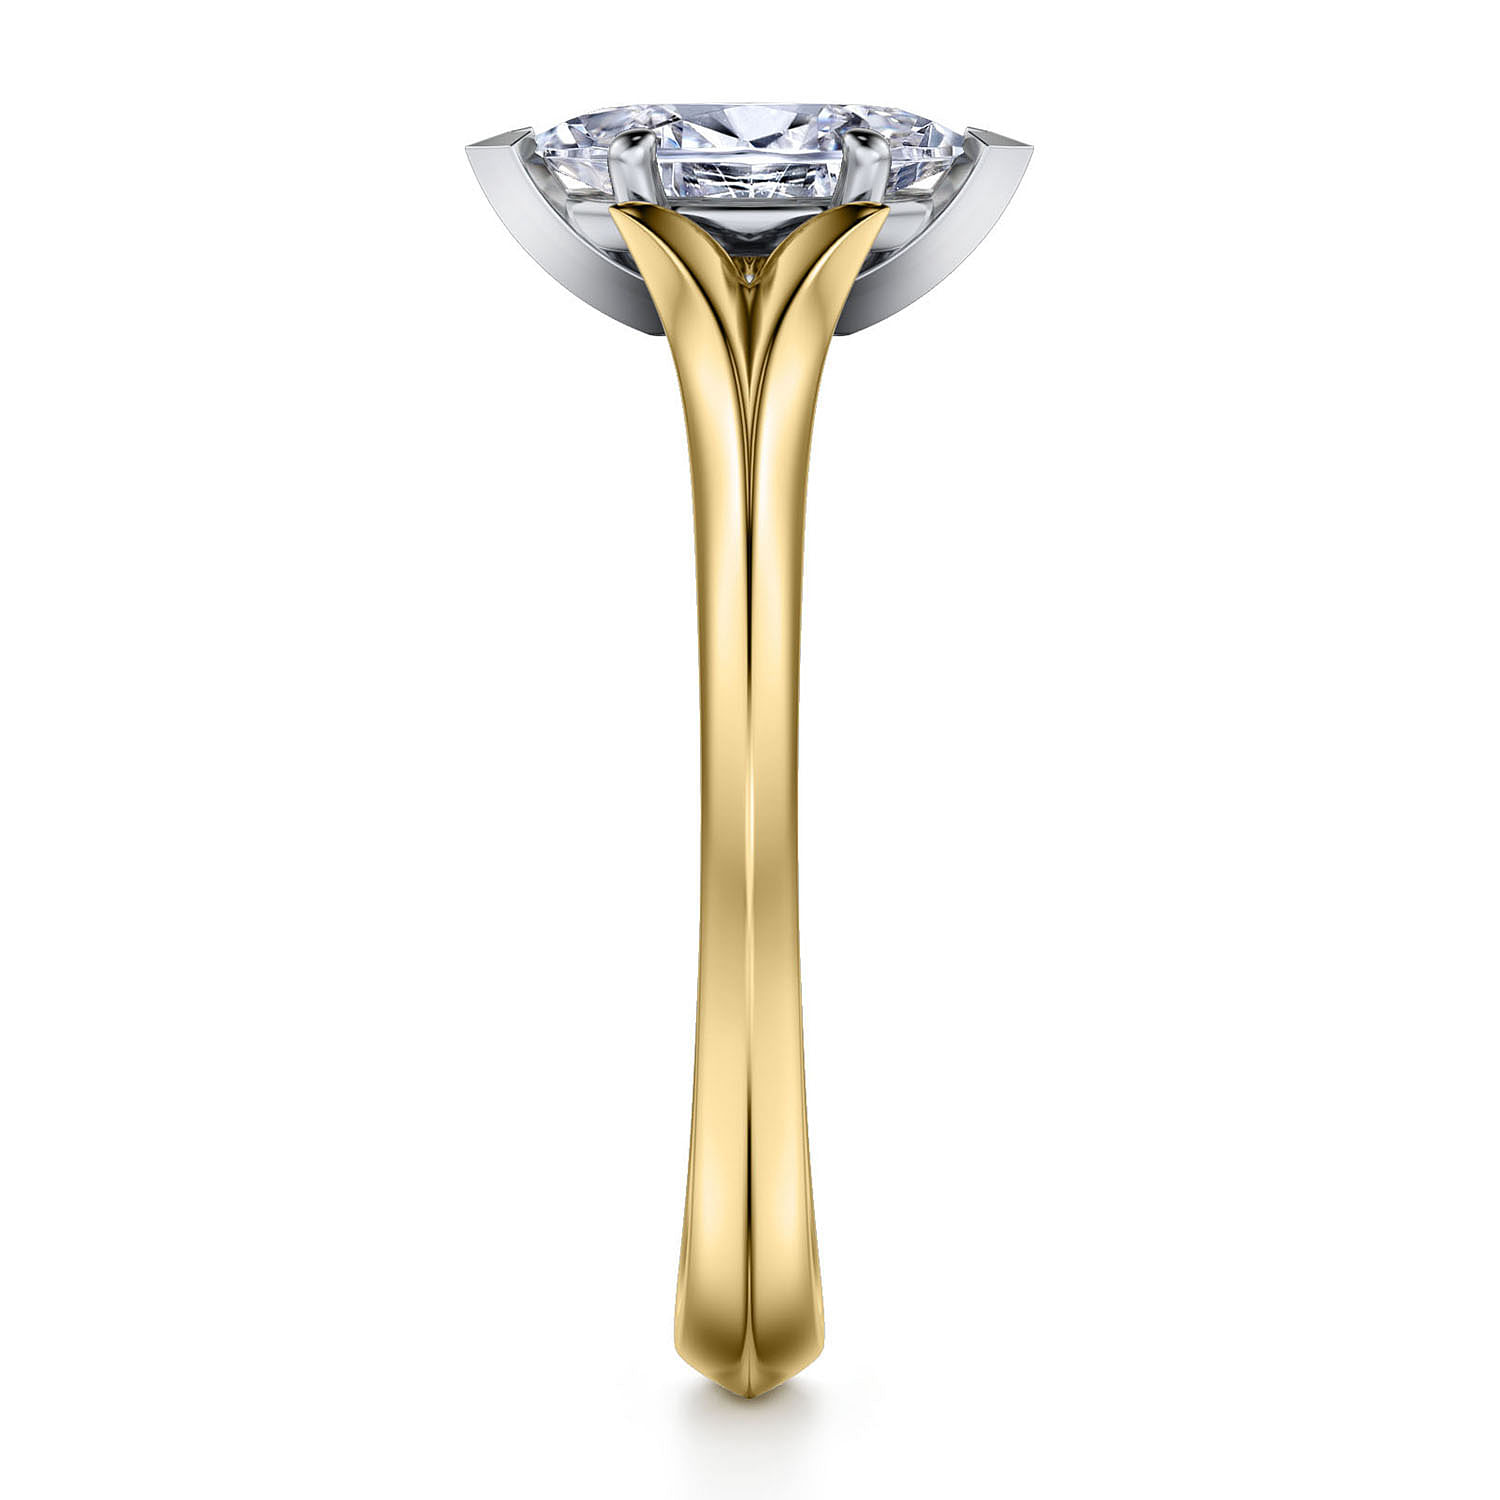 14K White-Yellow Gold Marquise Diamond Engagement Ring